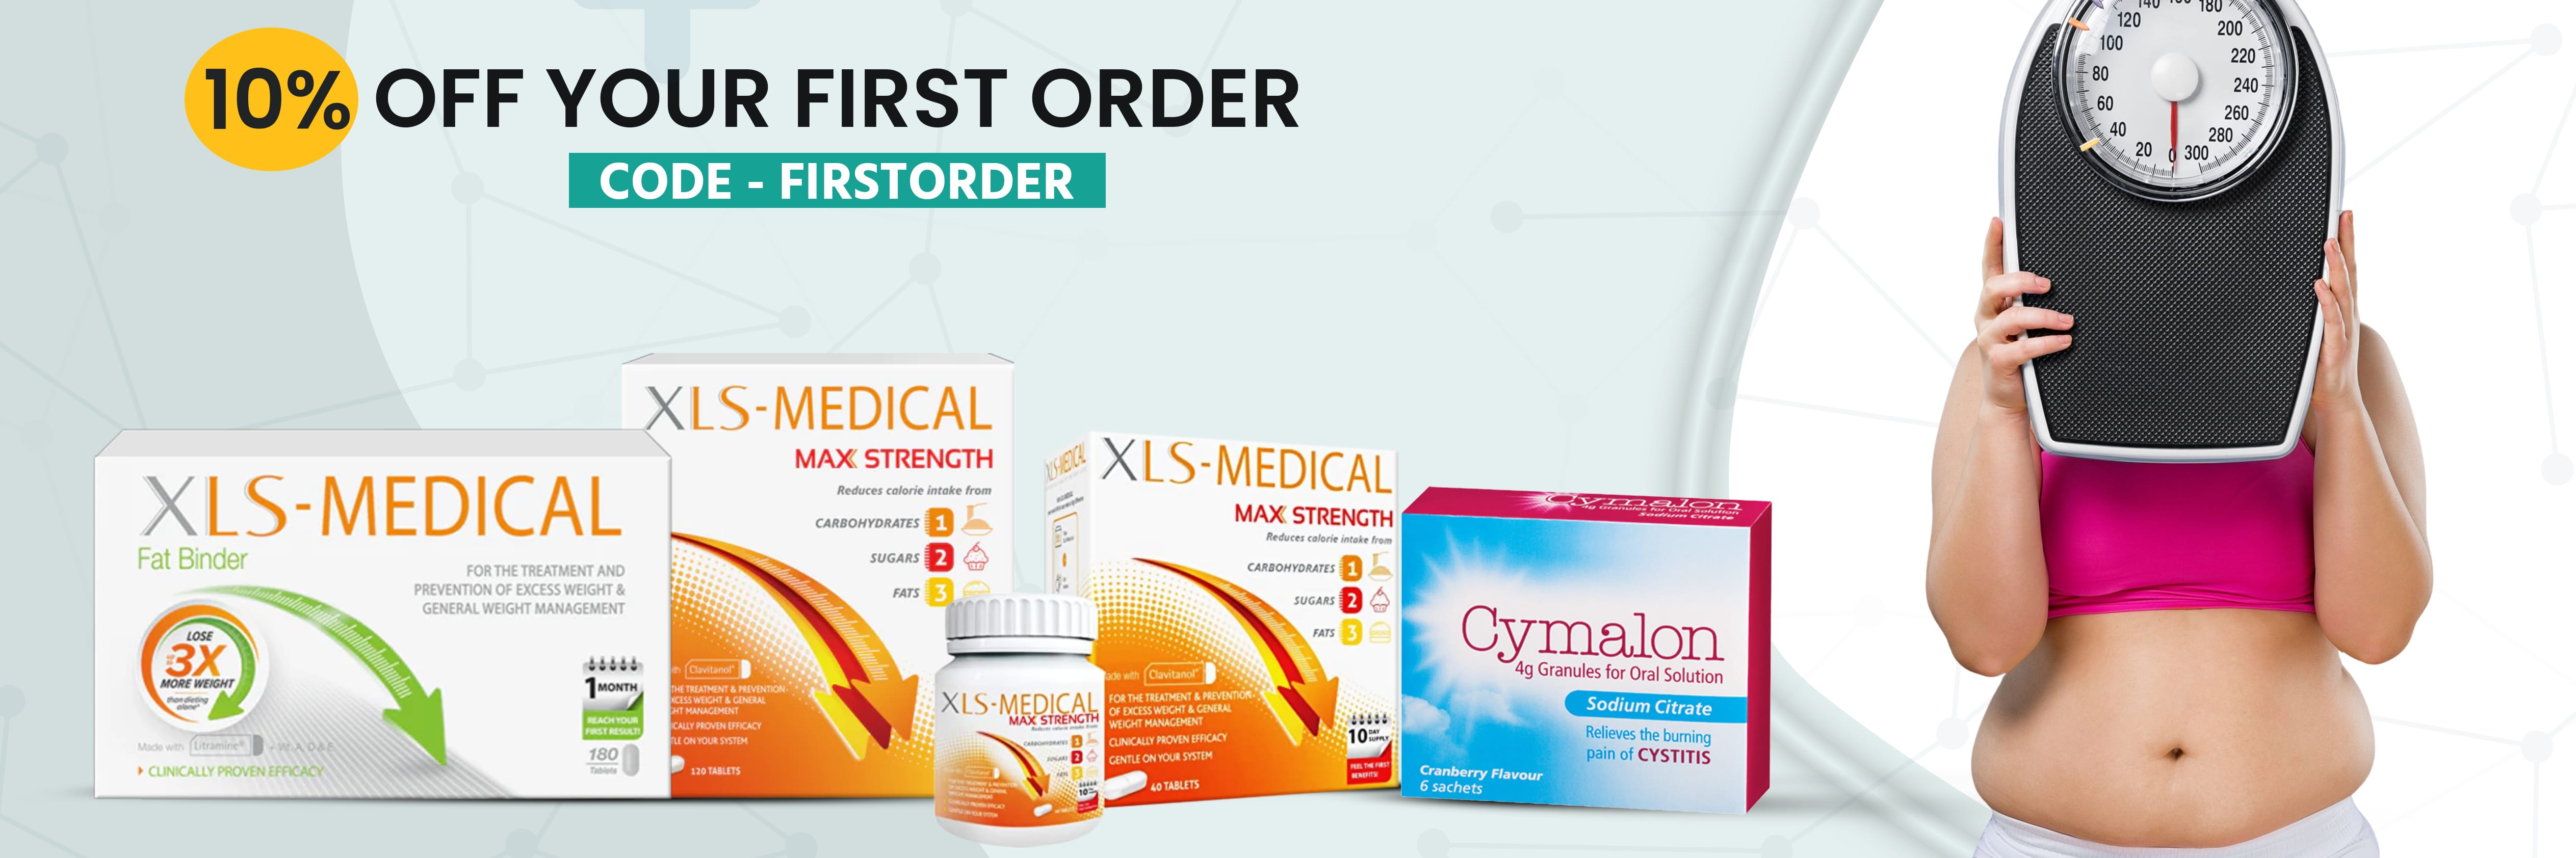 XLS-Medical Fat Binder Tablets